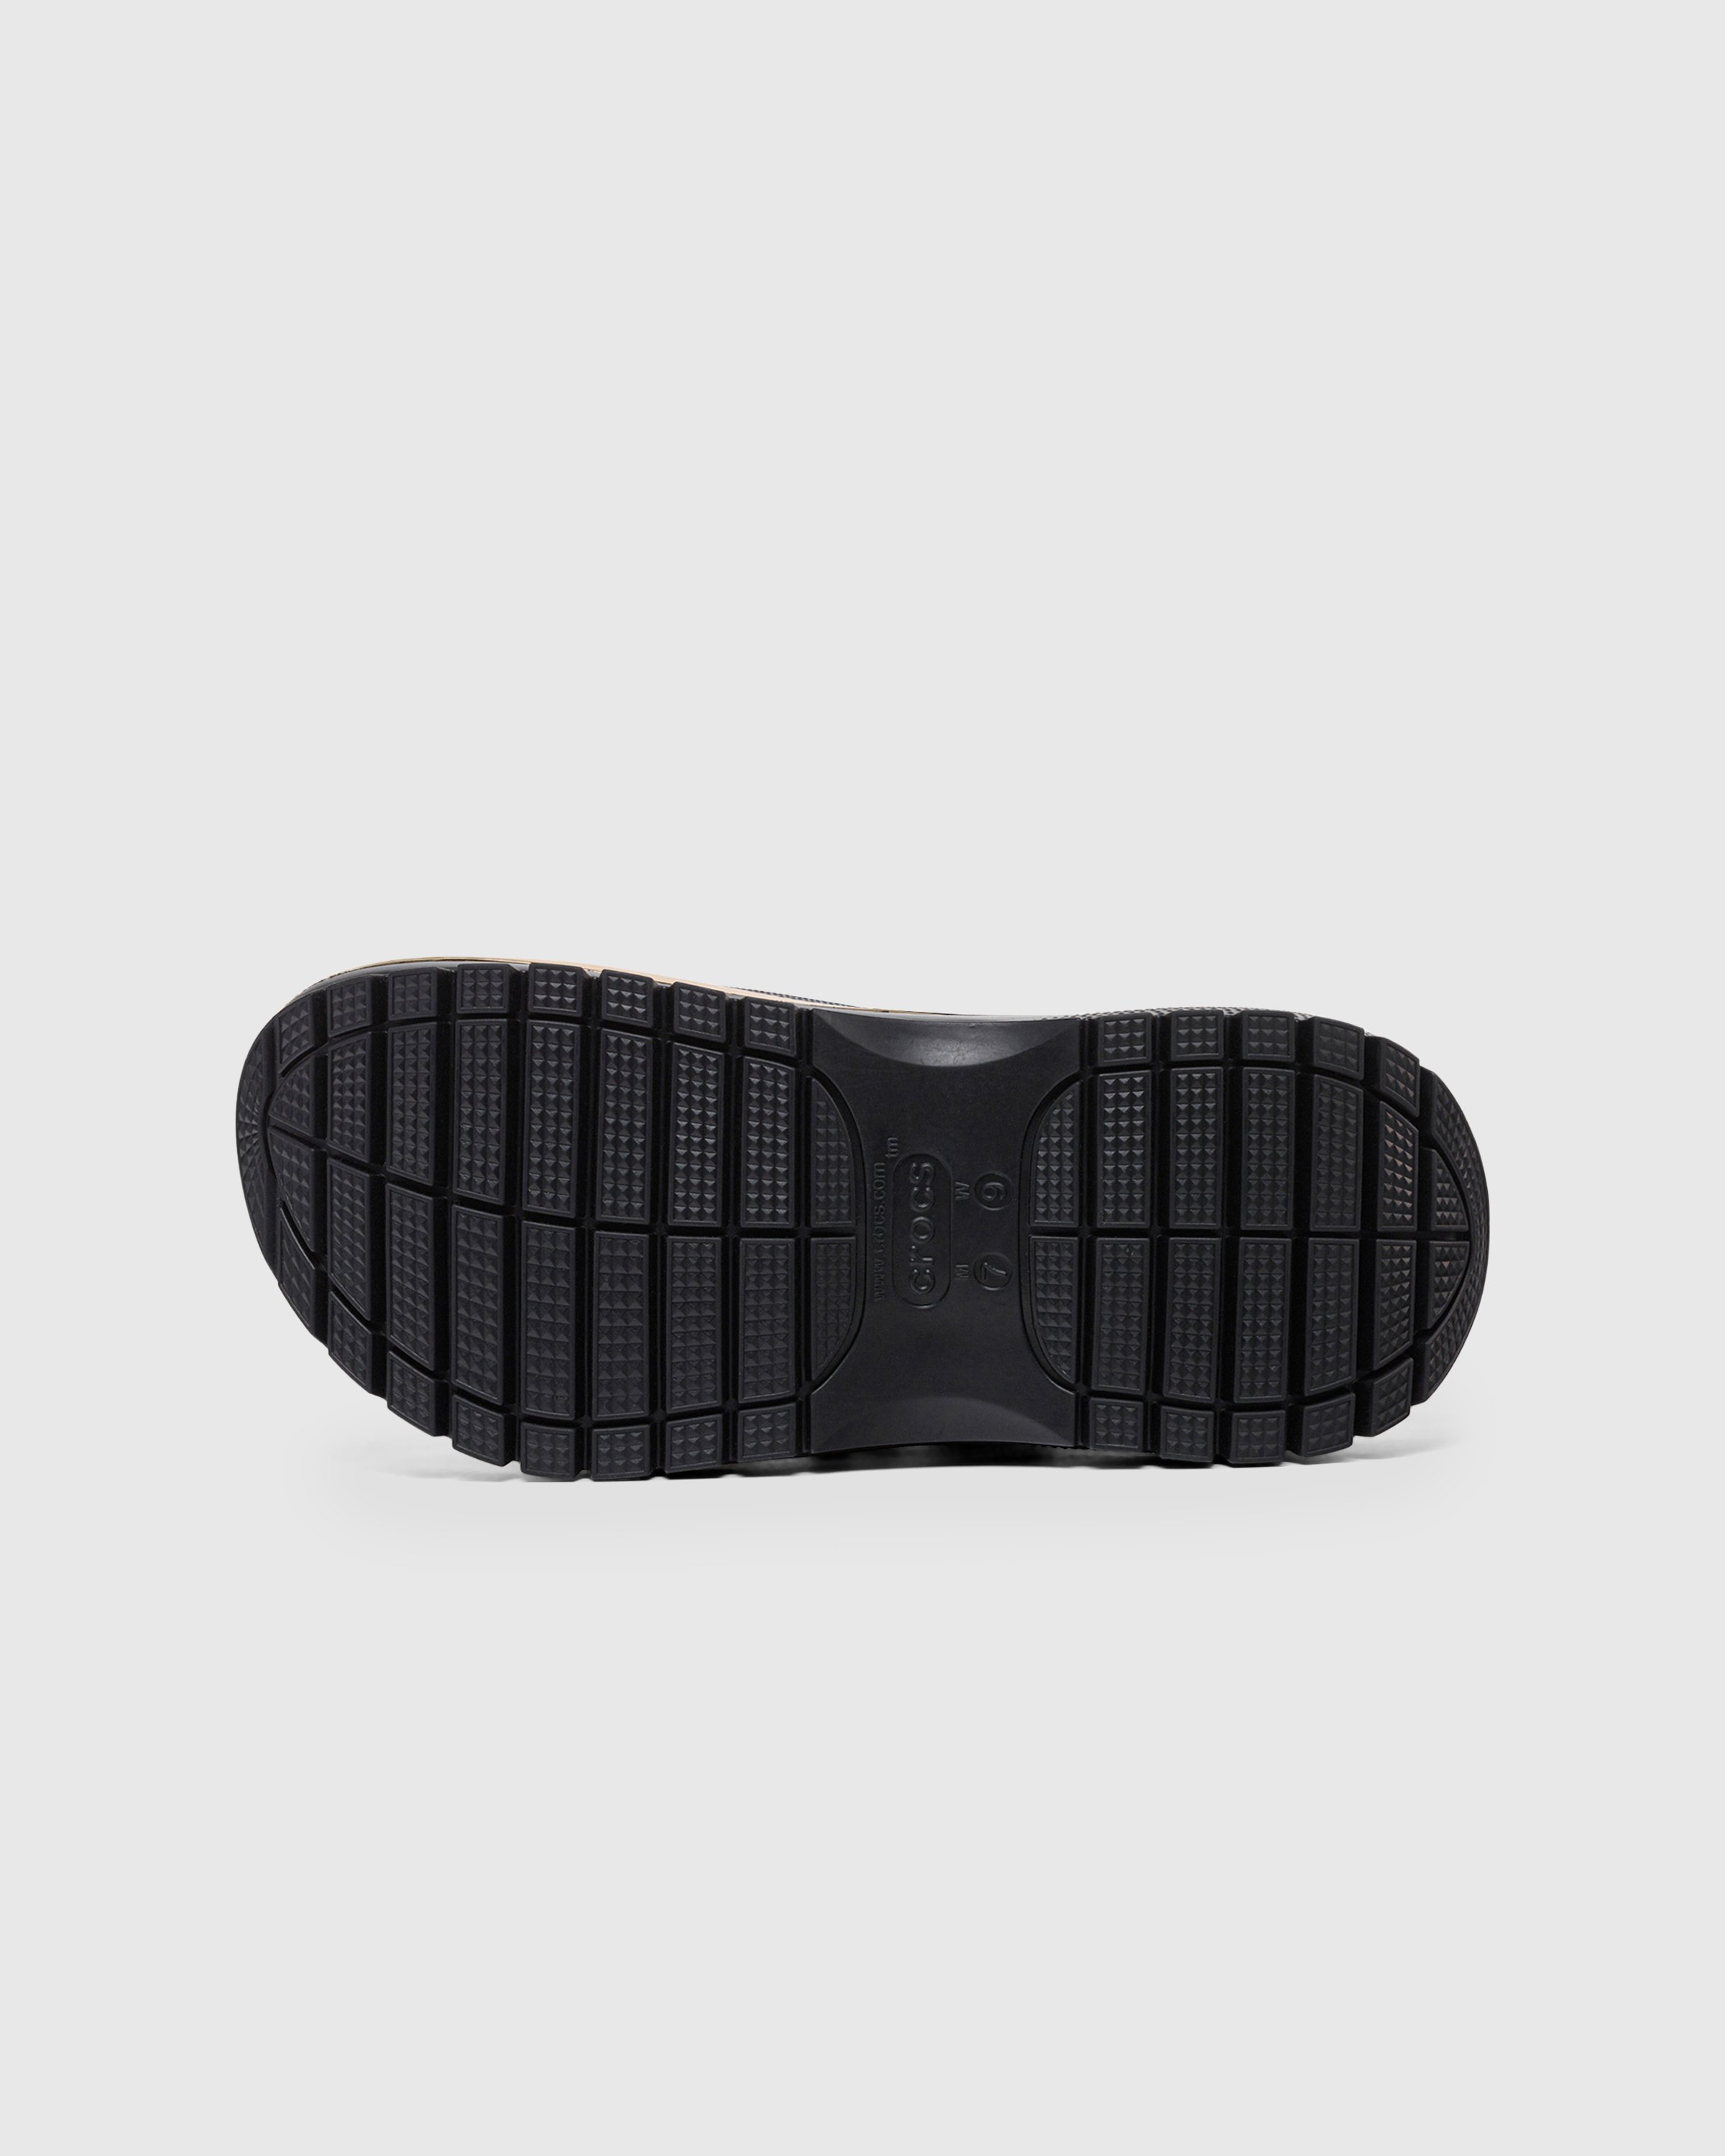 MCM x Crocs - MEGA CRUSH BB 365 Black - Footwear - Black - Image 5